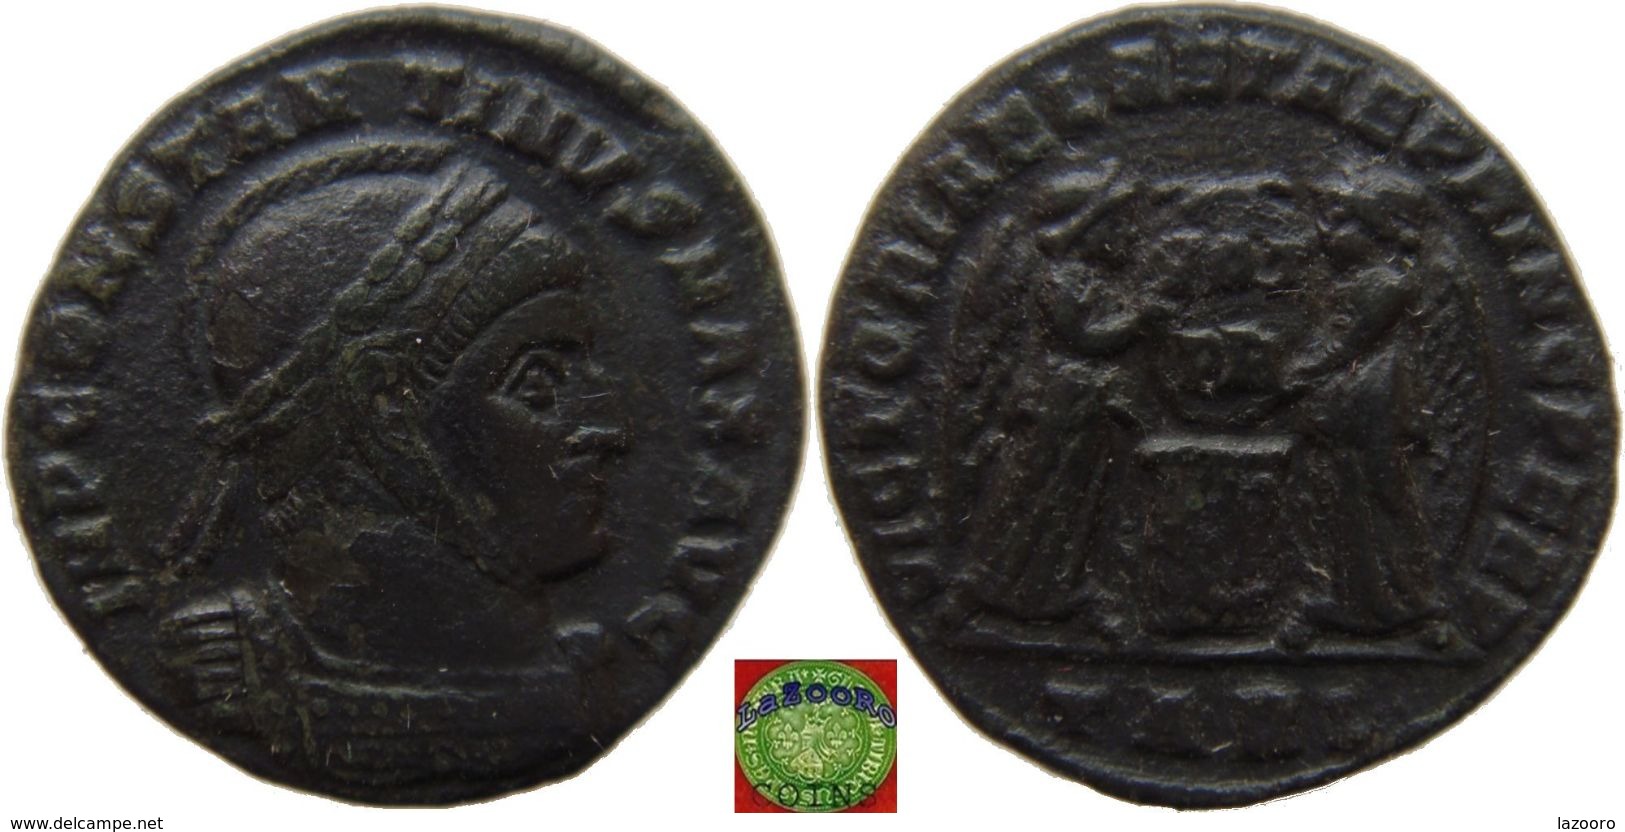 Roman Empire - BI Centenionalis (Follis) Of Constantine The Great (306 - 337 AD), VICTORIAE LAETAE PRINC PERP, R3 - L'Empire Chrétien (307 à 363)